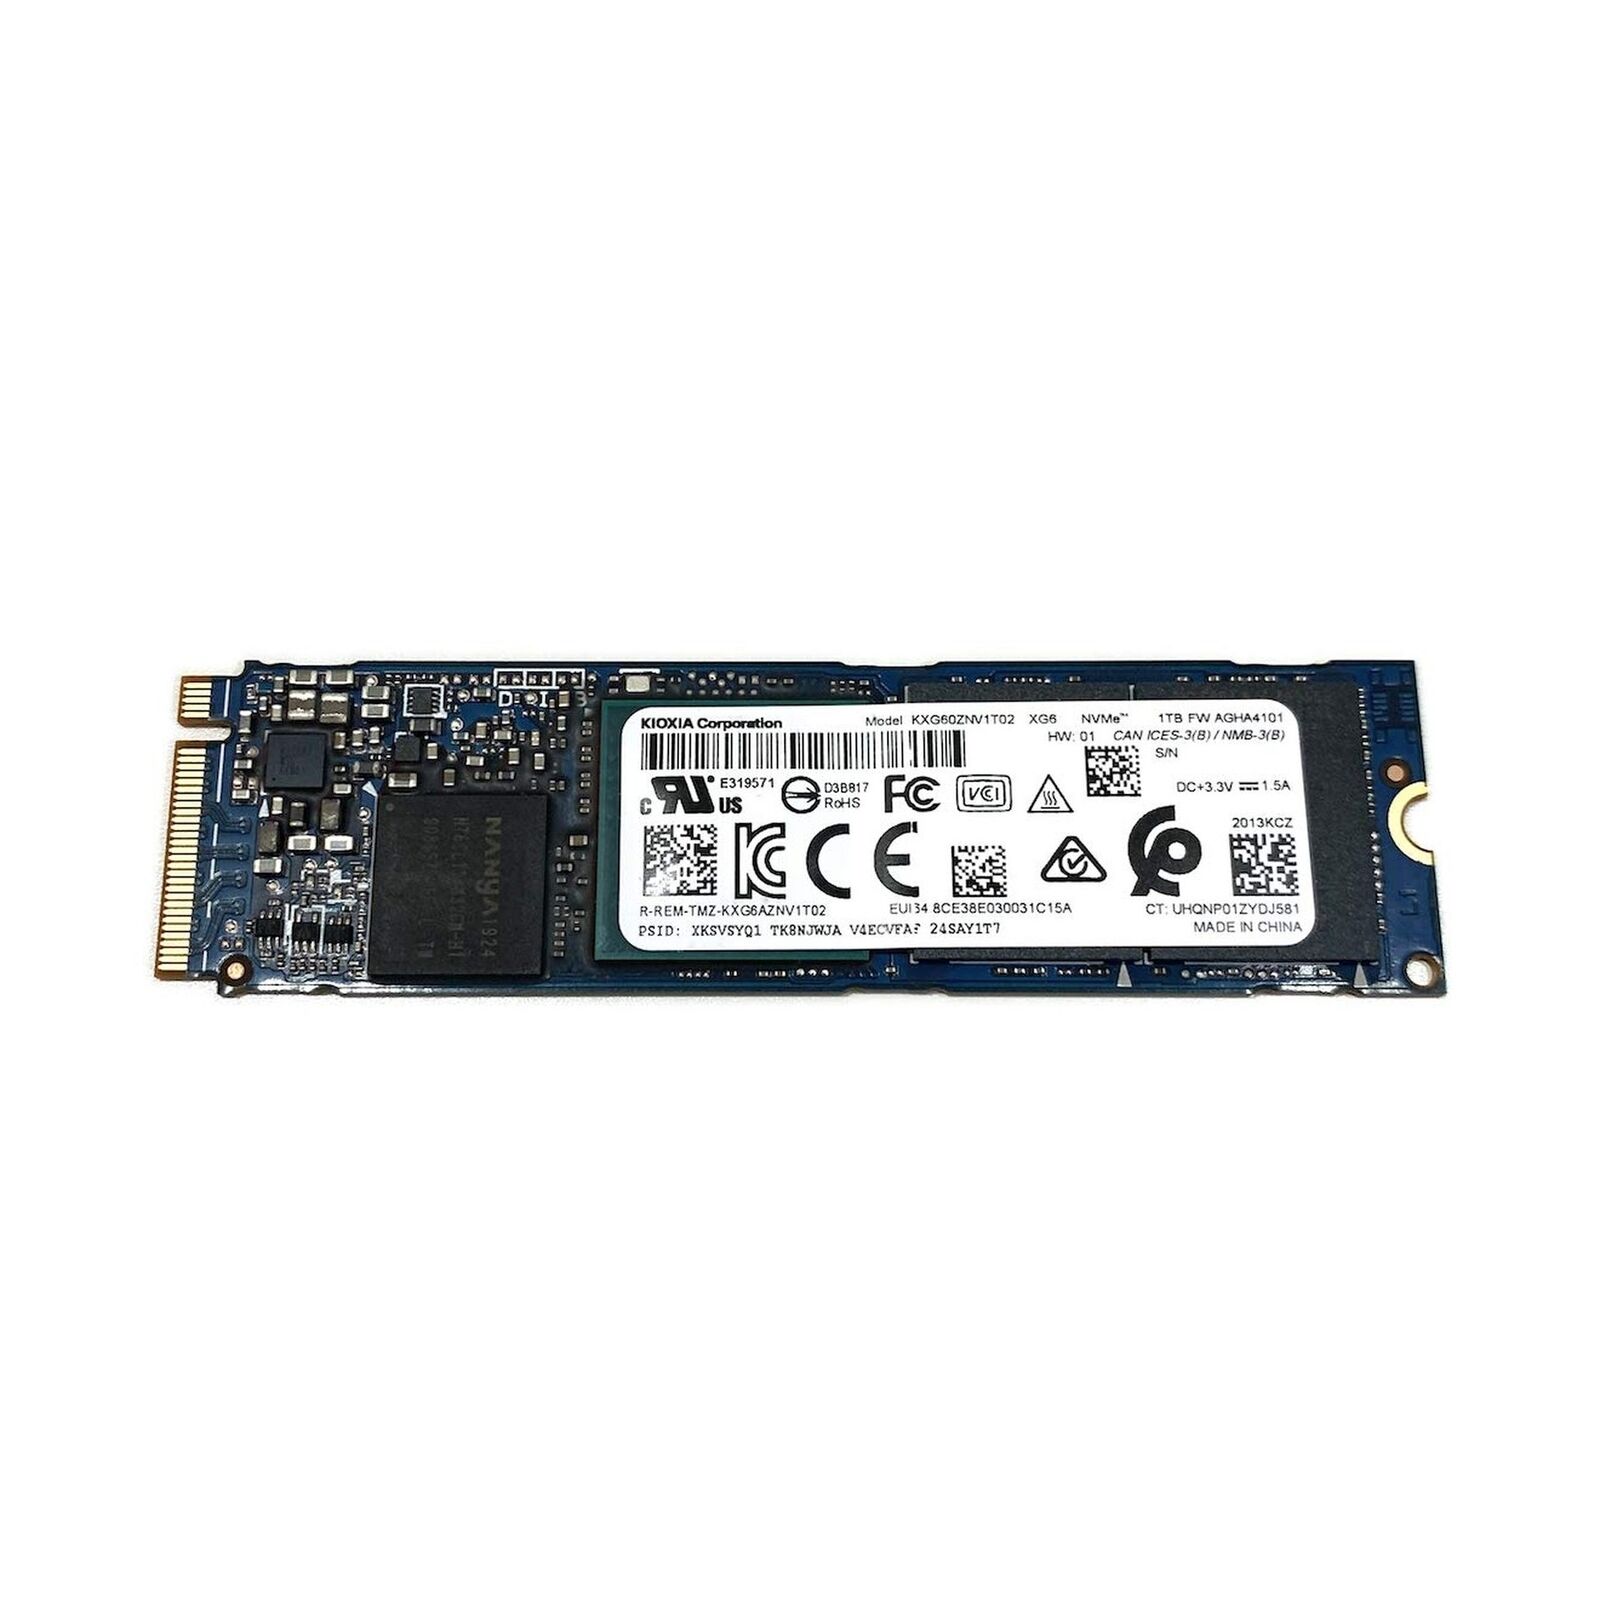 Kioxia 1TB SSD XG6 M.2 2280 PCIe Gen3 x4 NVMe KXG60ZNV1T02 Solid State Drive